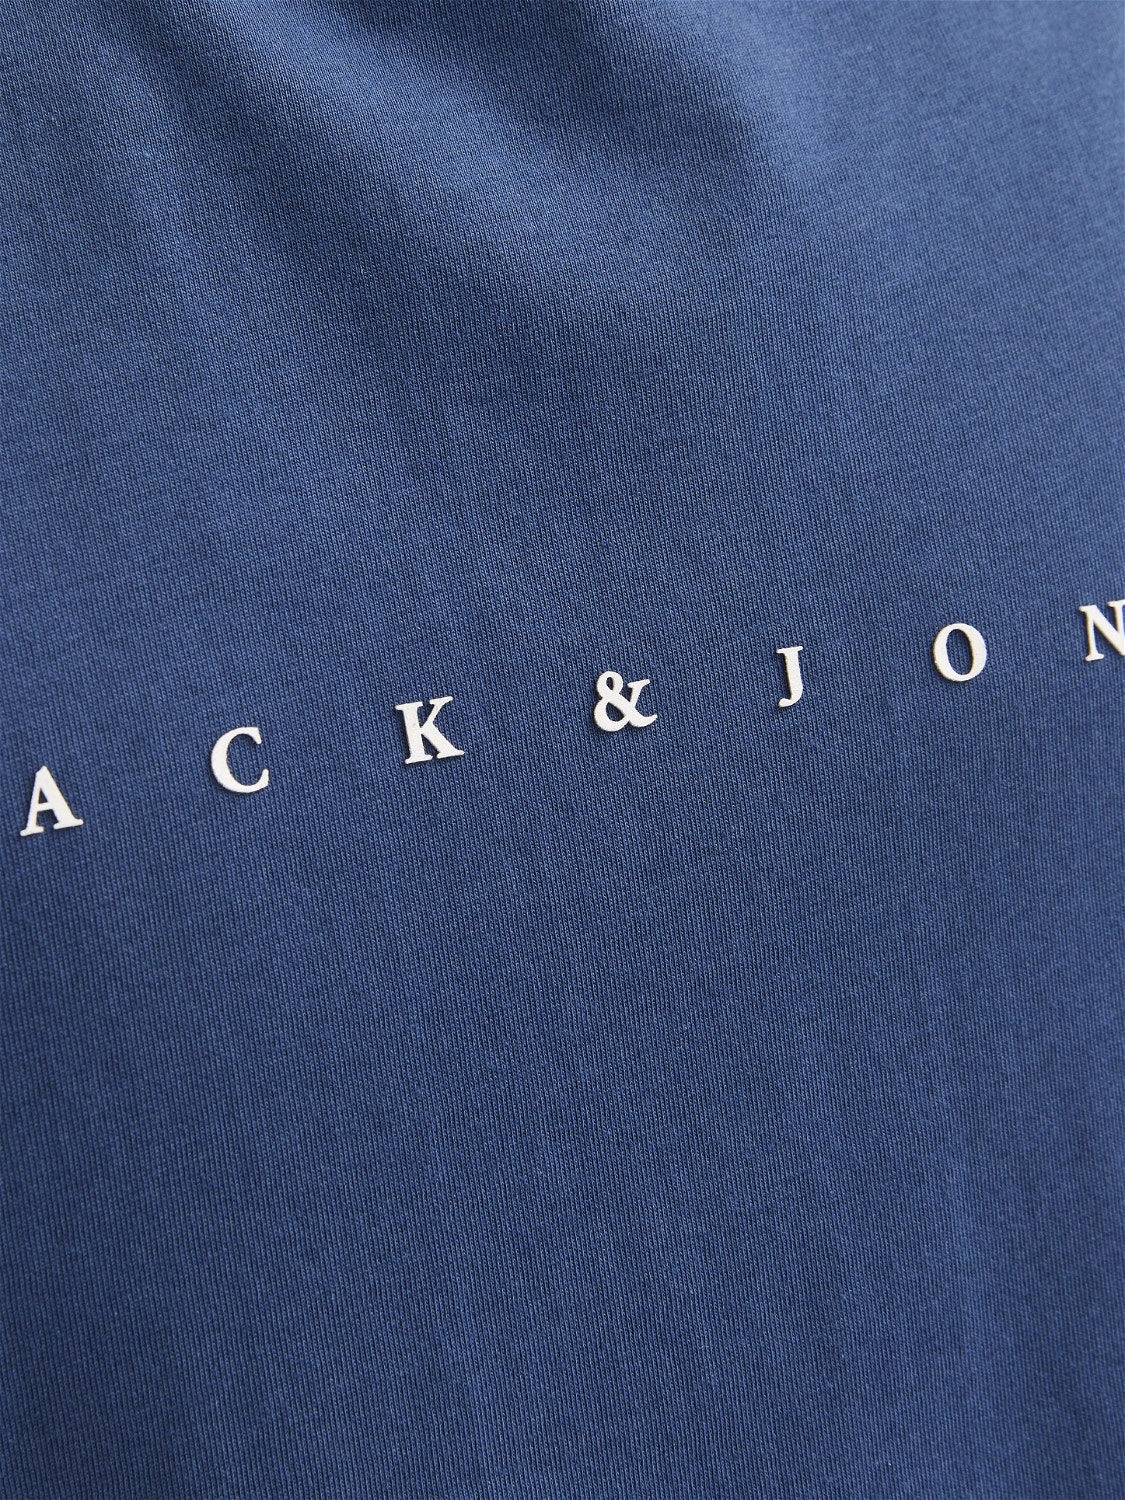 Jack & Jones Printed Crew neck T-shirt -Ensign Blue - 12249131